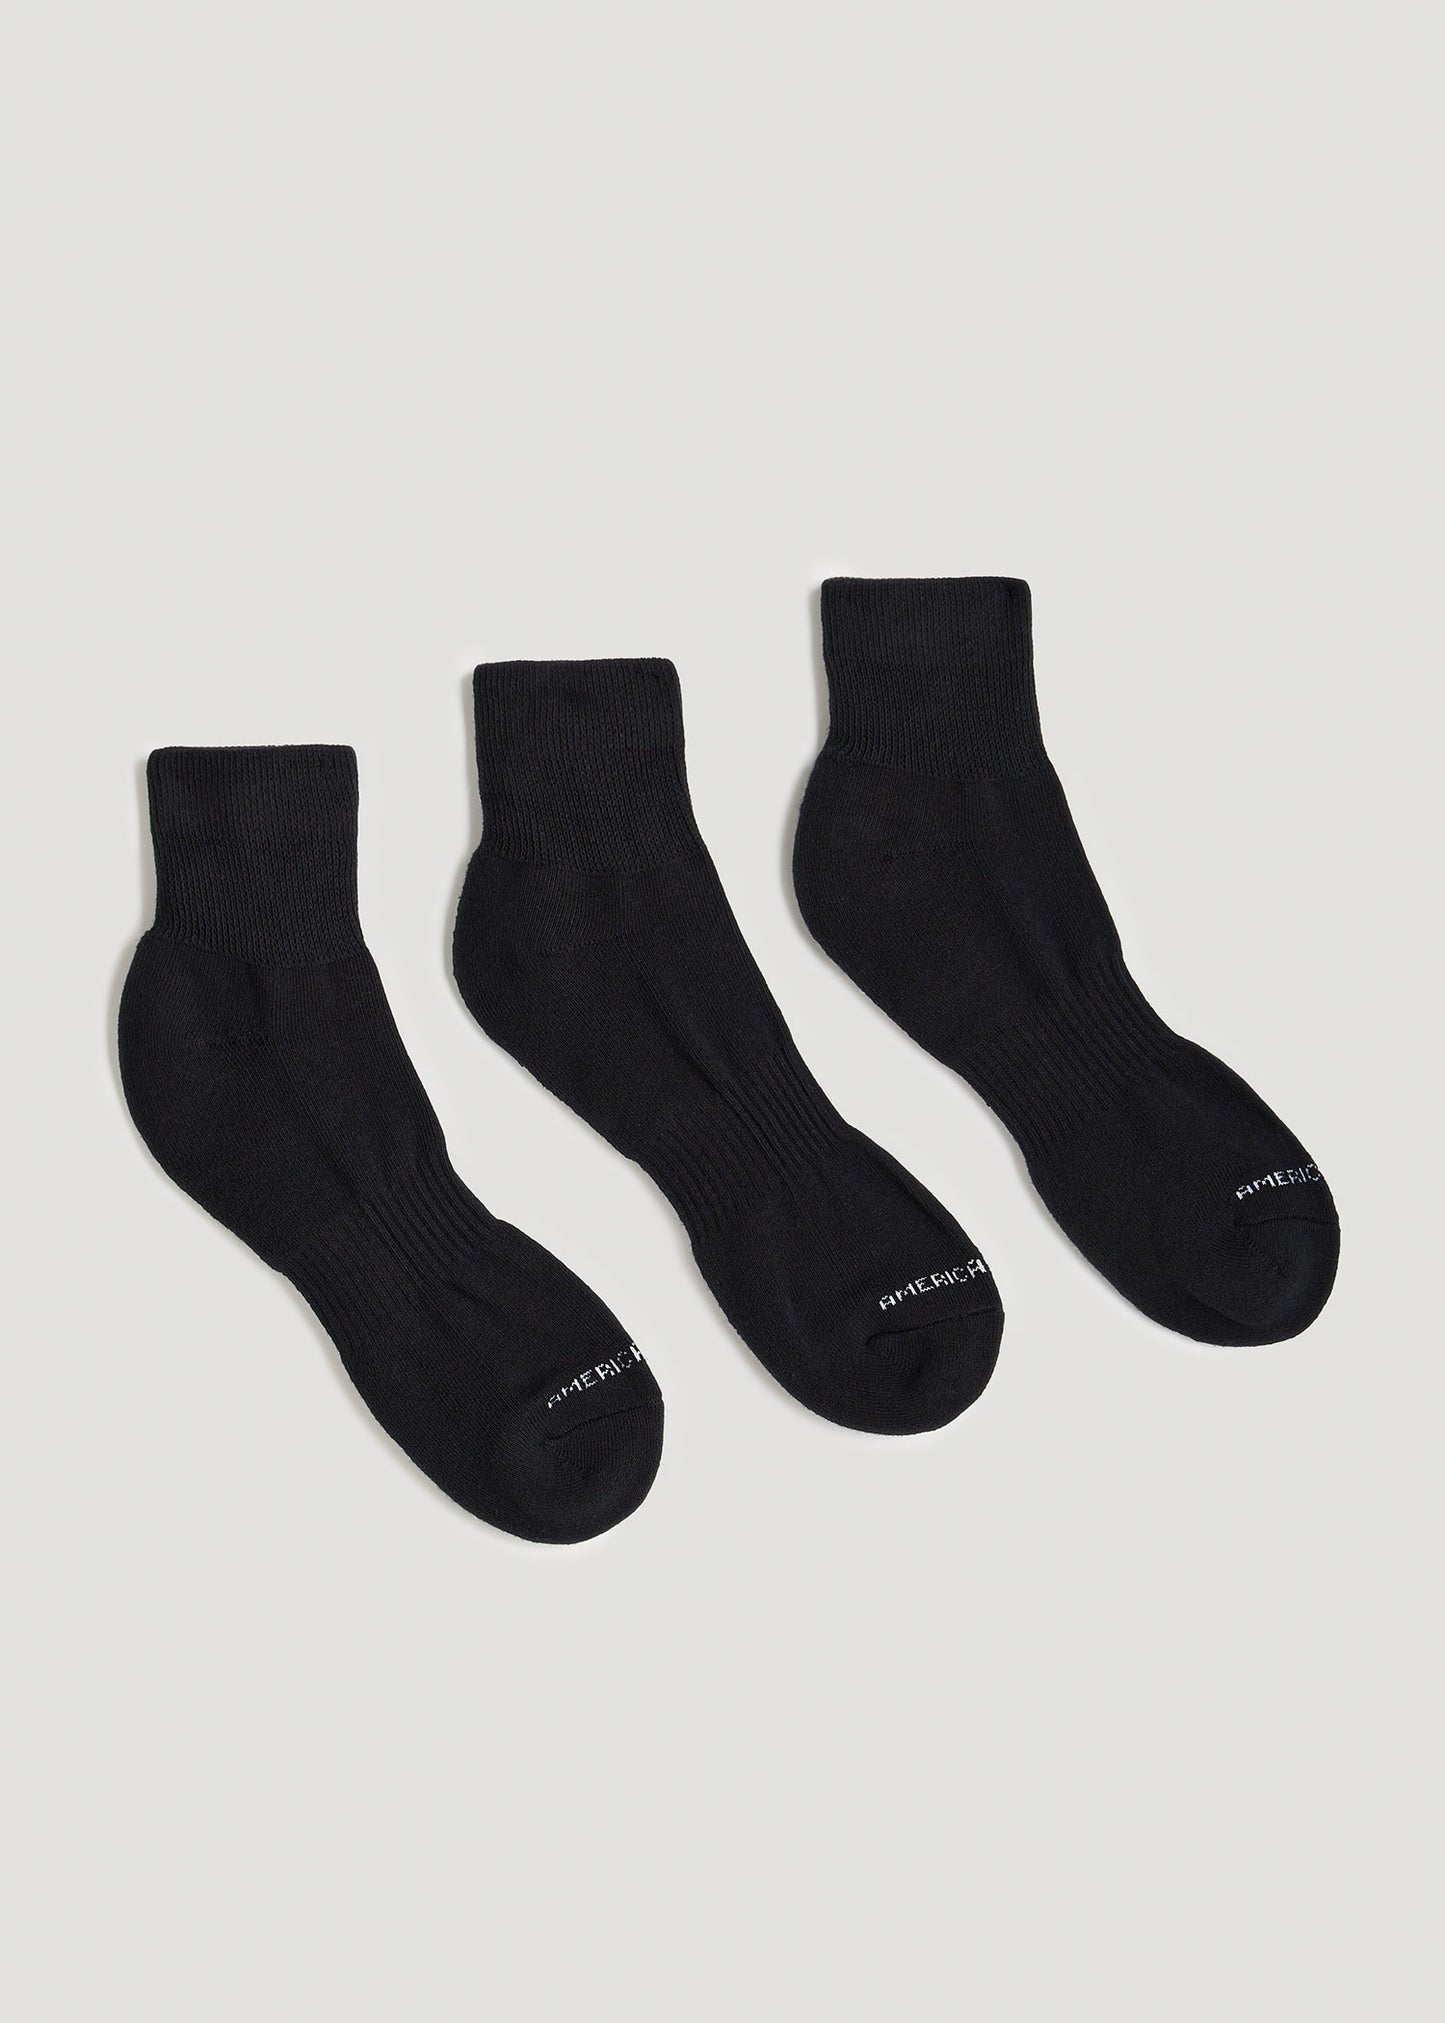 Men's Athletic Mid Ankle Socks (X-Large Size: 14-17)